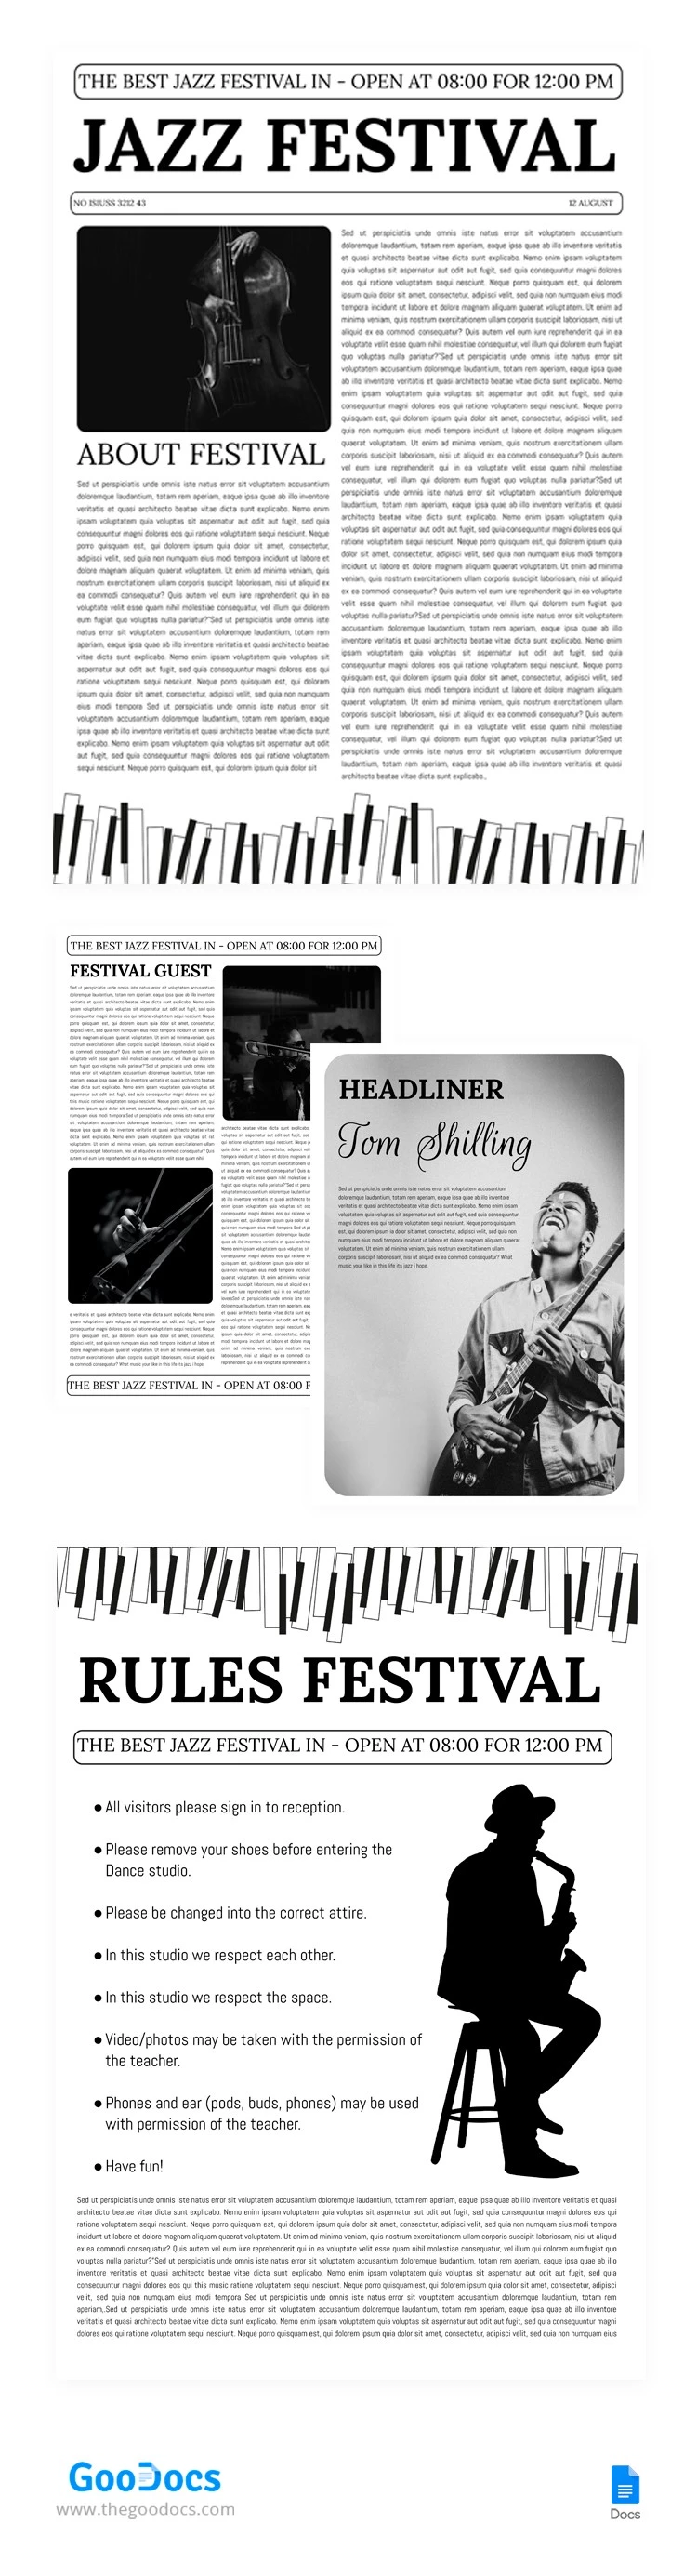 Periódico del Festival de Jazz - free Google Docs Template - 10065741